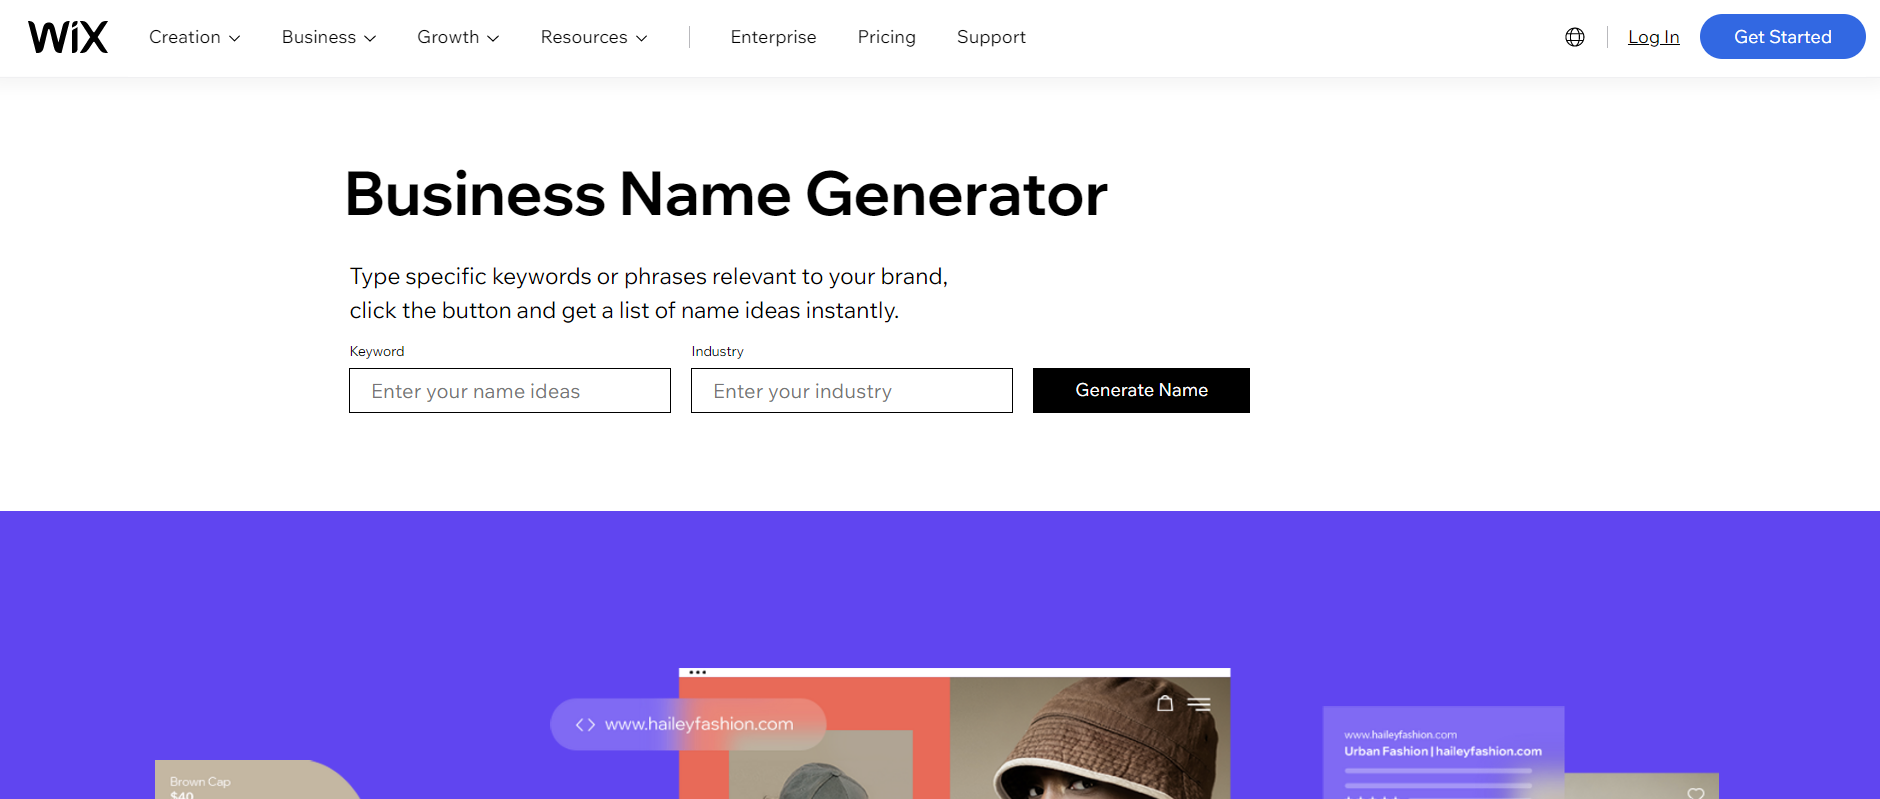 wix business name generator